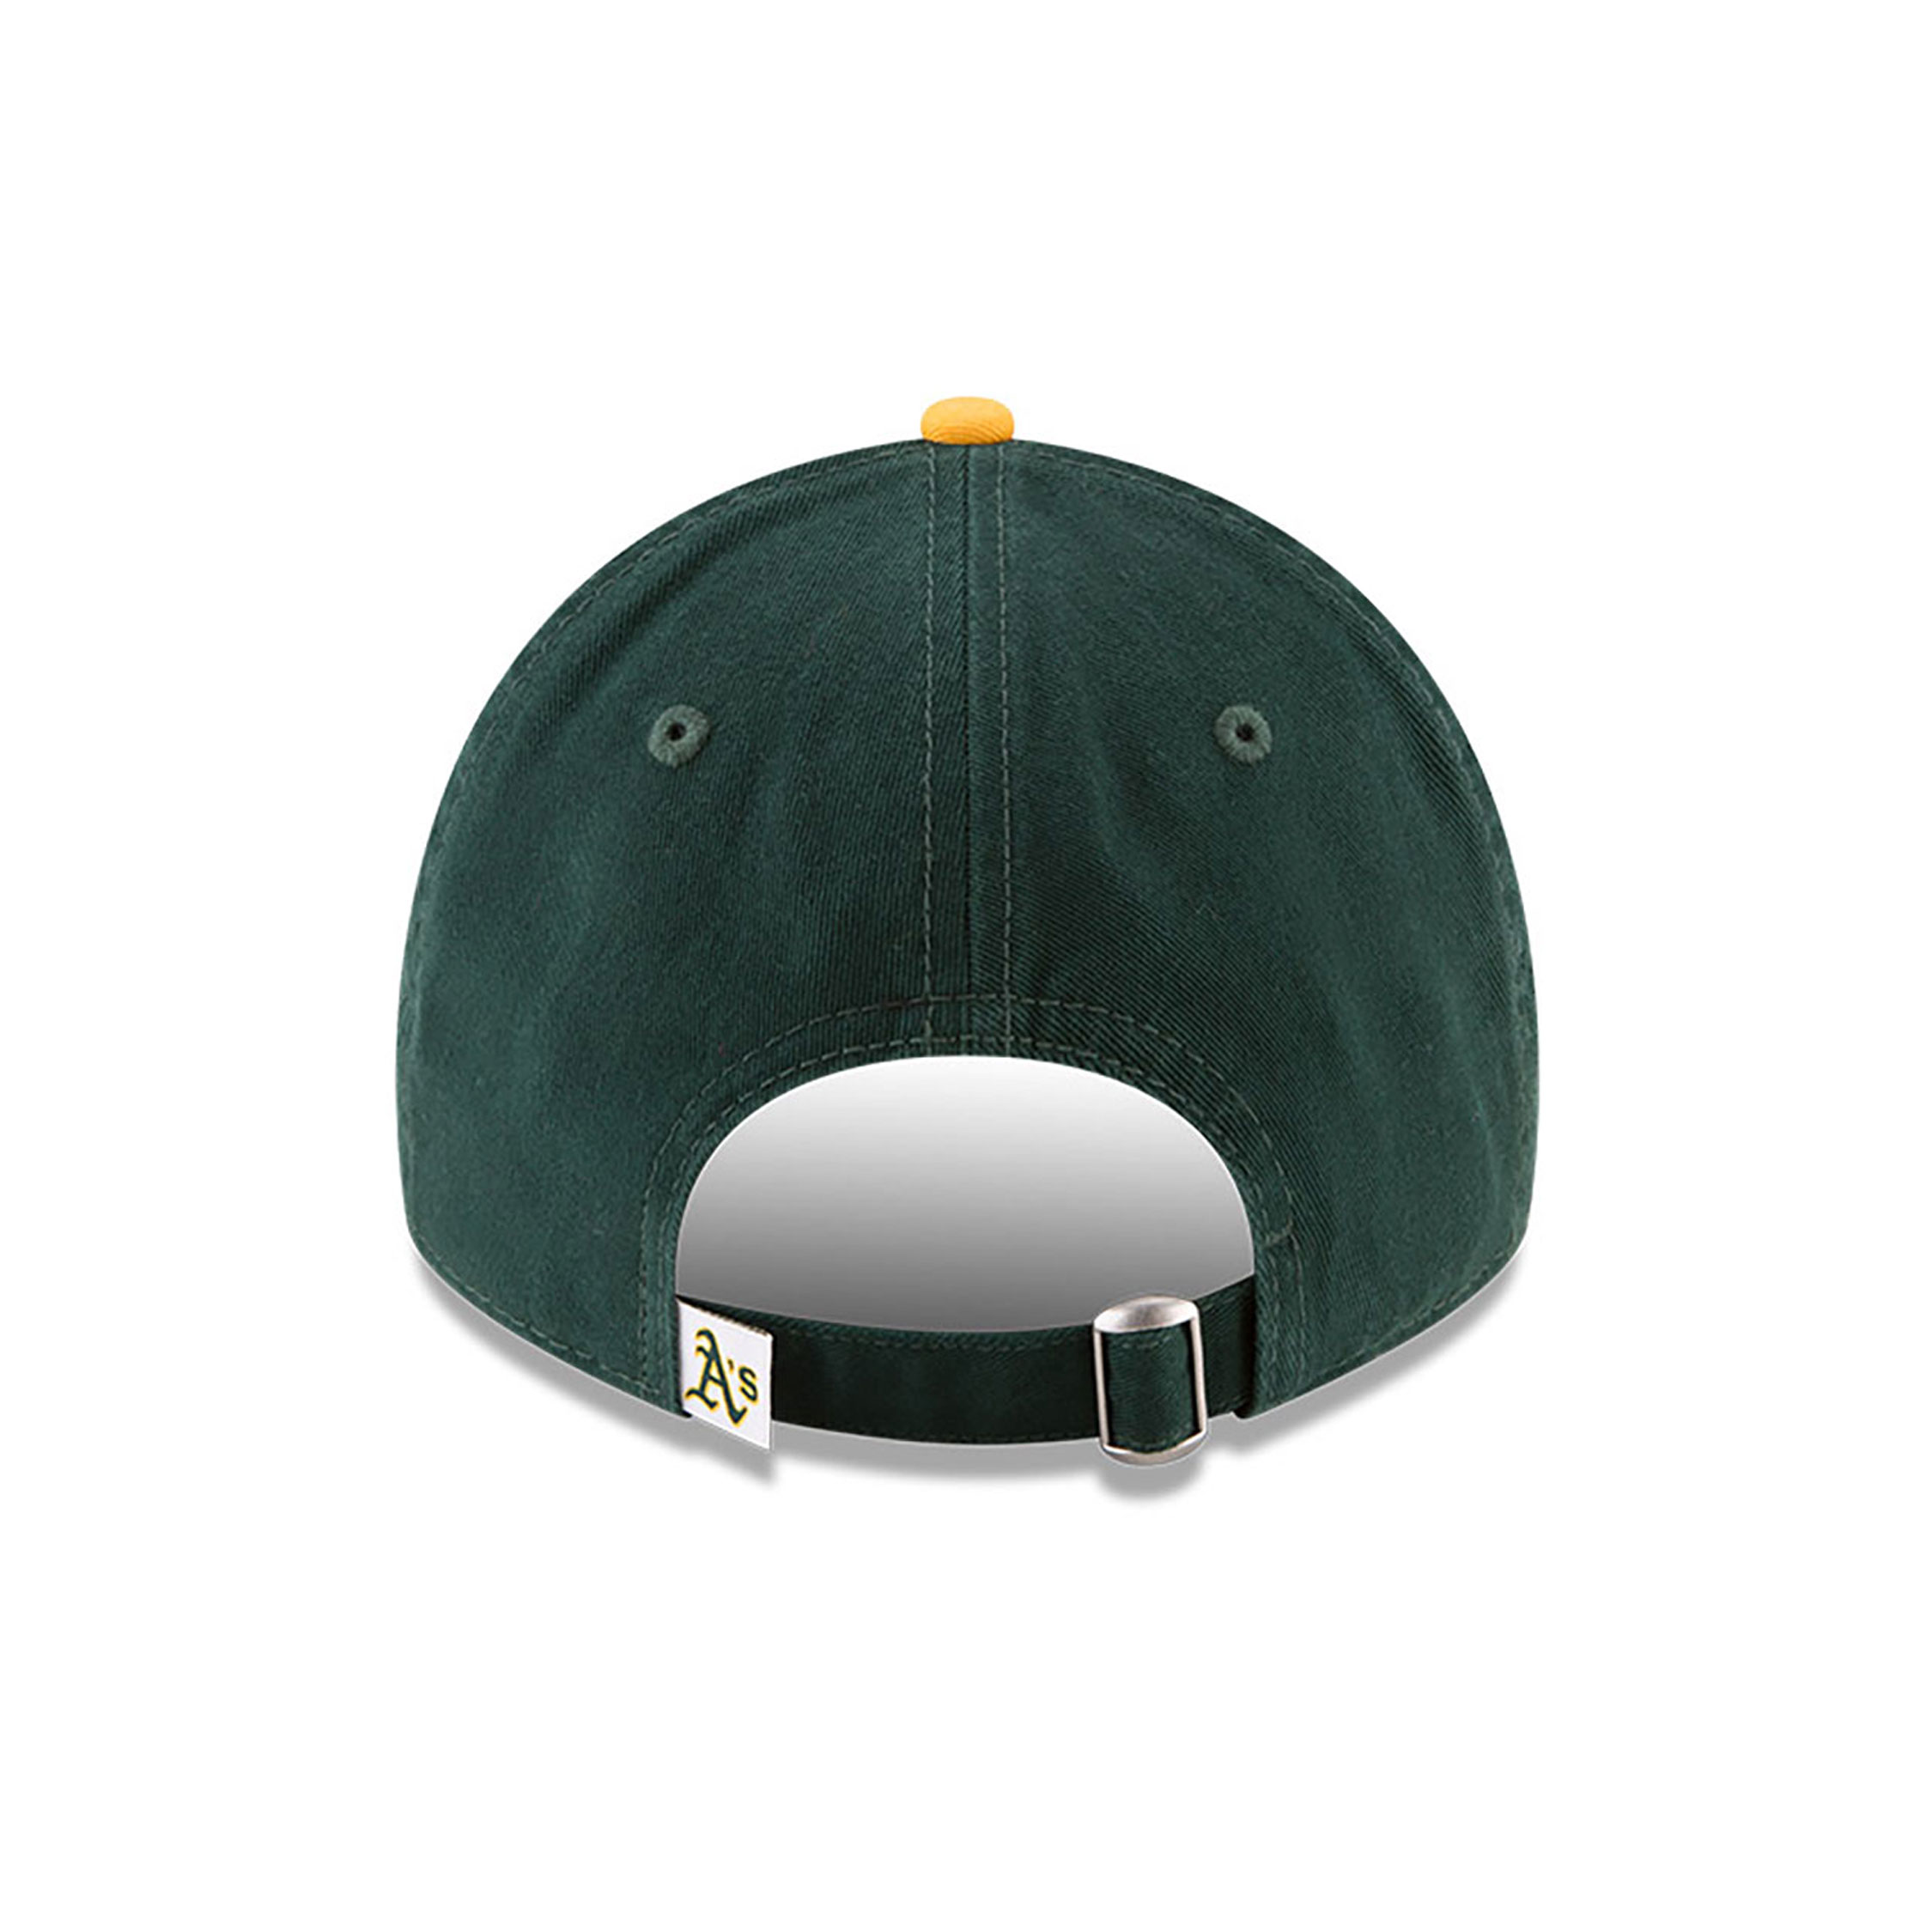 Oakland Athletics MLB Core Classic Dark Green and Yellow 9TWENTY Adjustable Cap